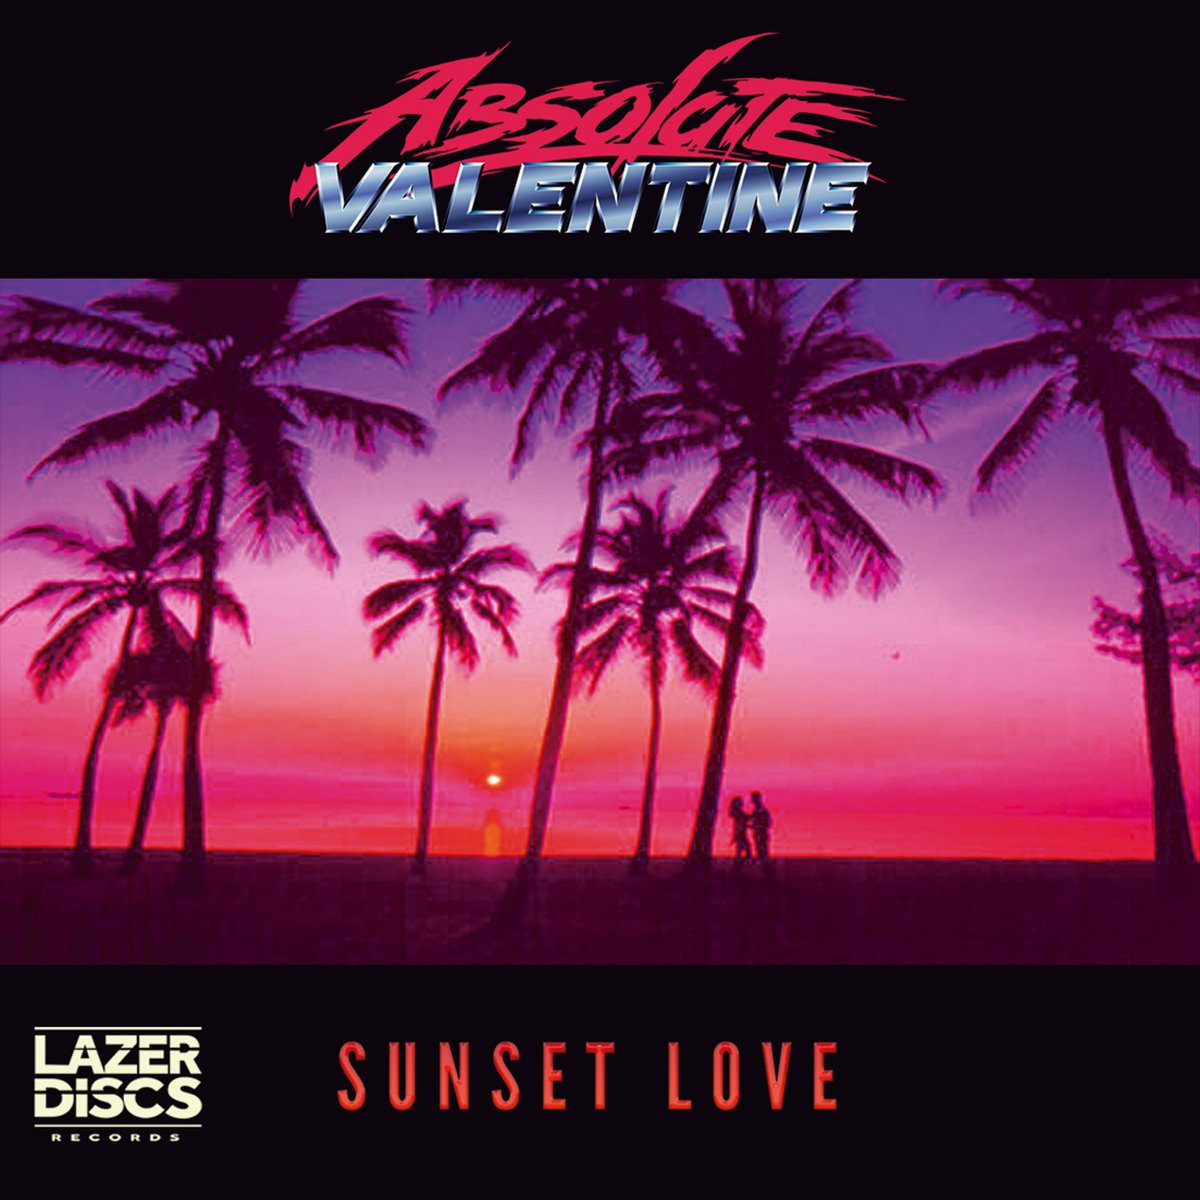 - Absolute Valentine - Sunset Love